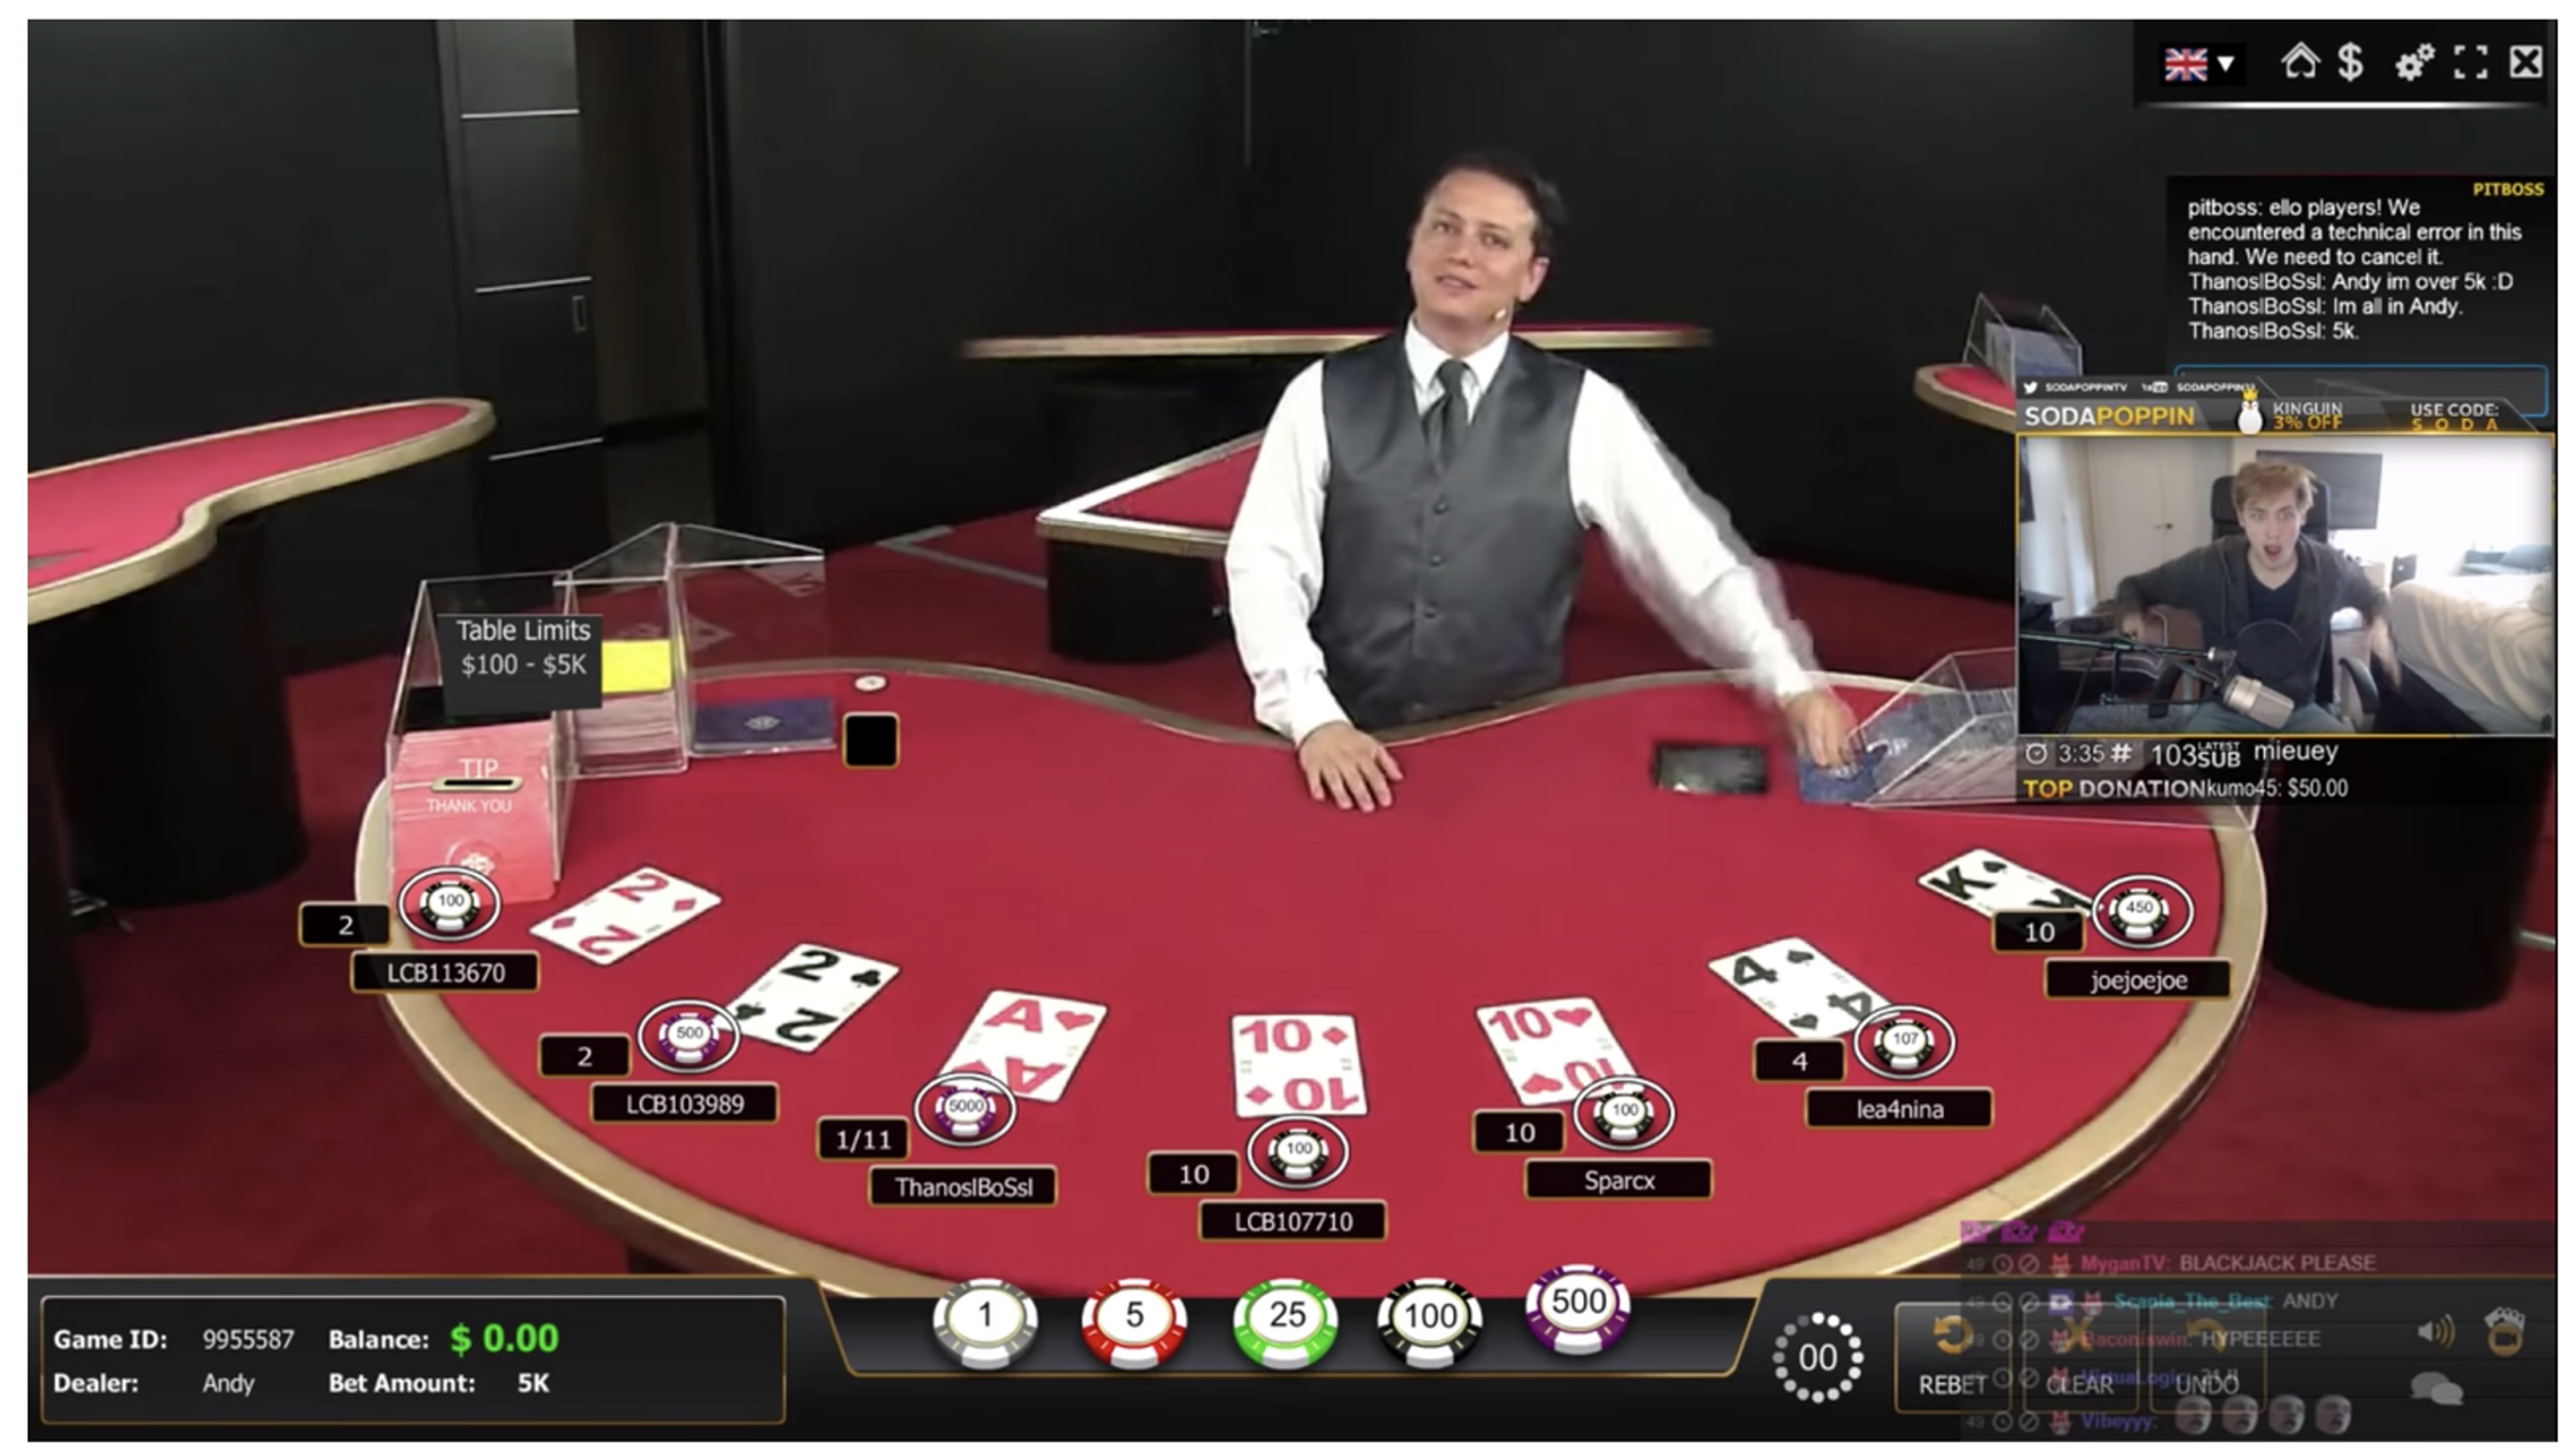 Streamer sodapoppin bets big at a video casino - https://youtube.com/sodapoppin